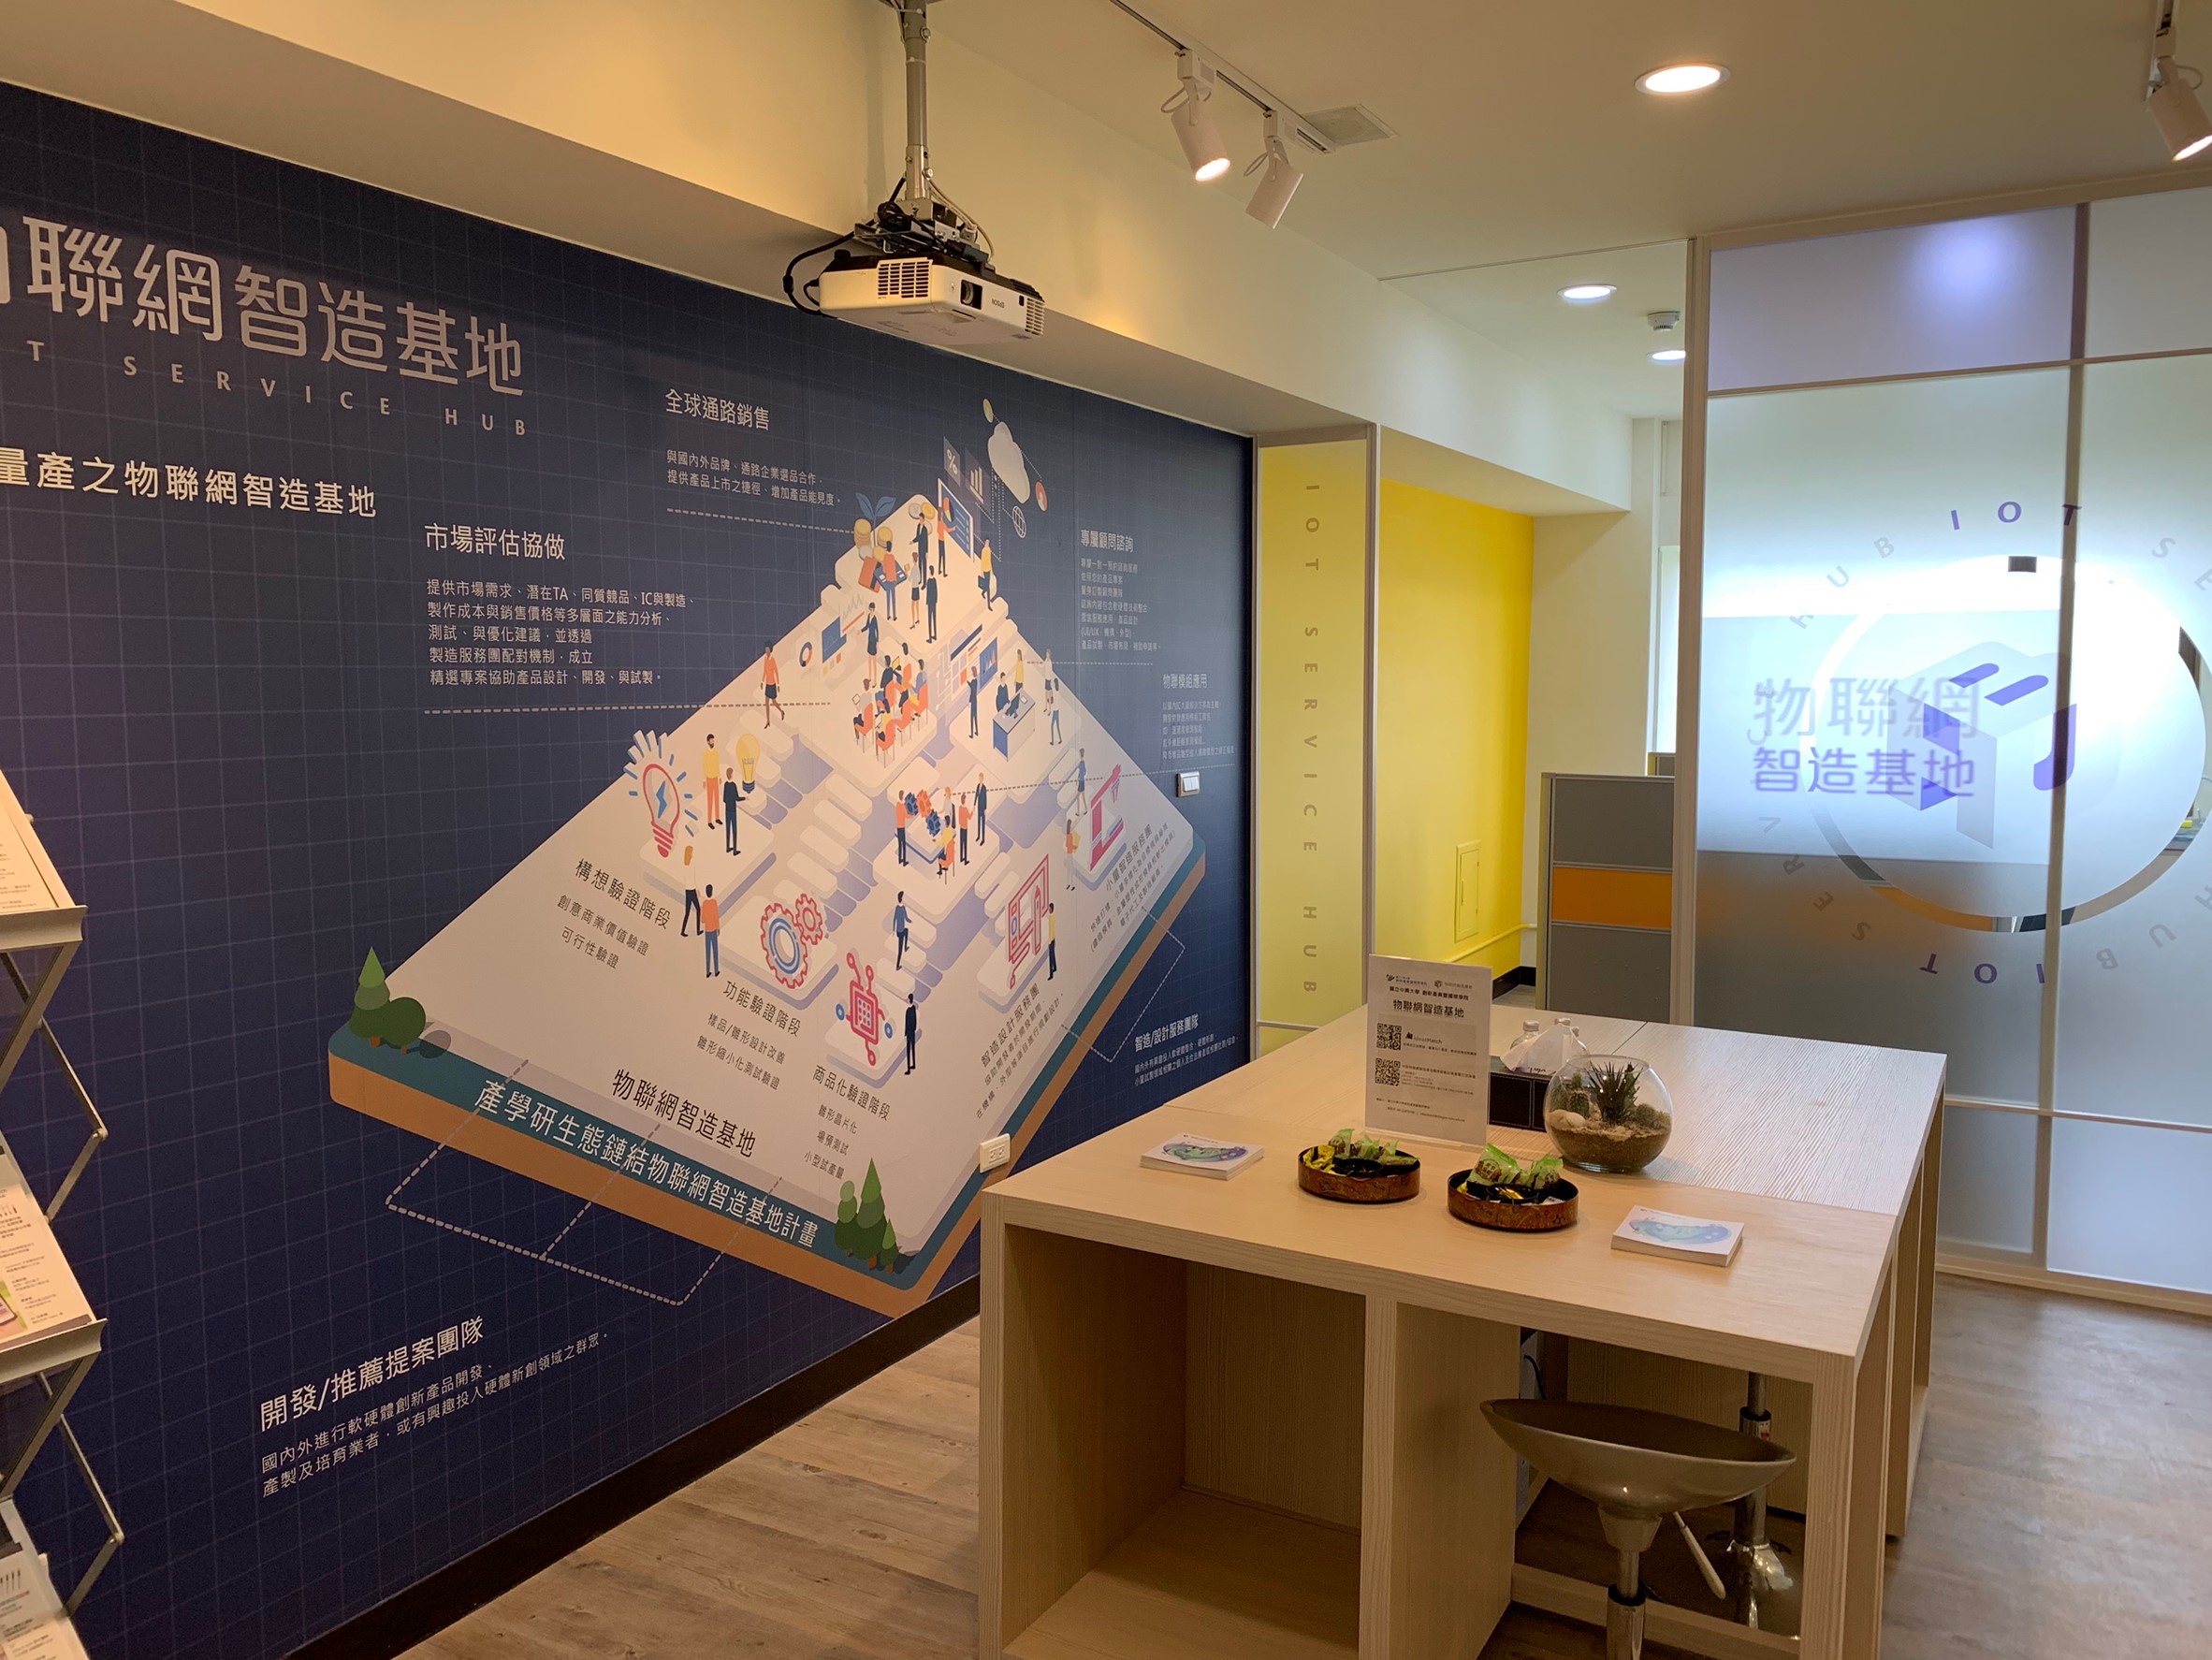 CENTRAL TAIWAN IoT SERVICE HUB